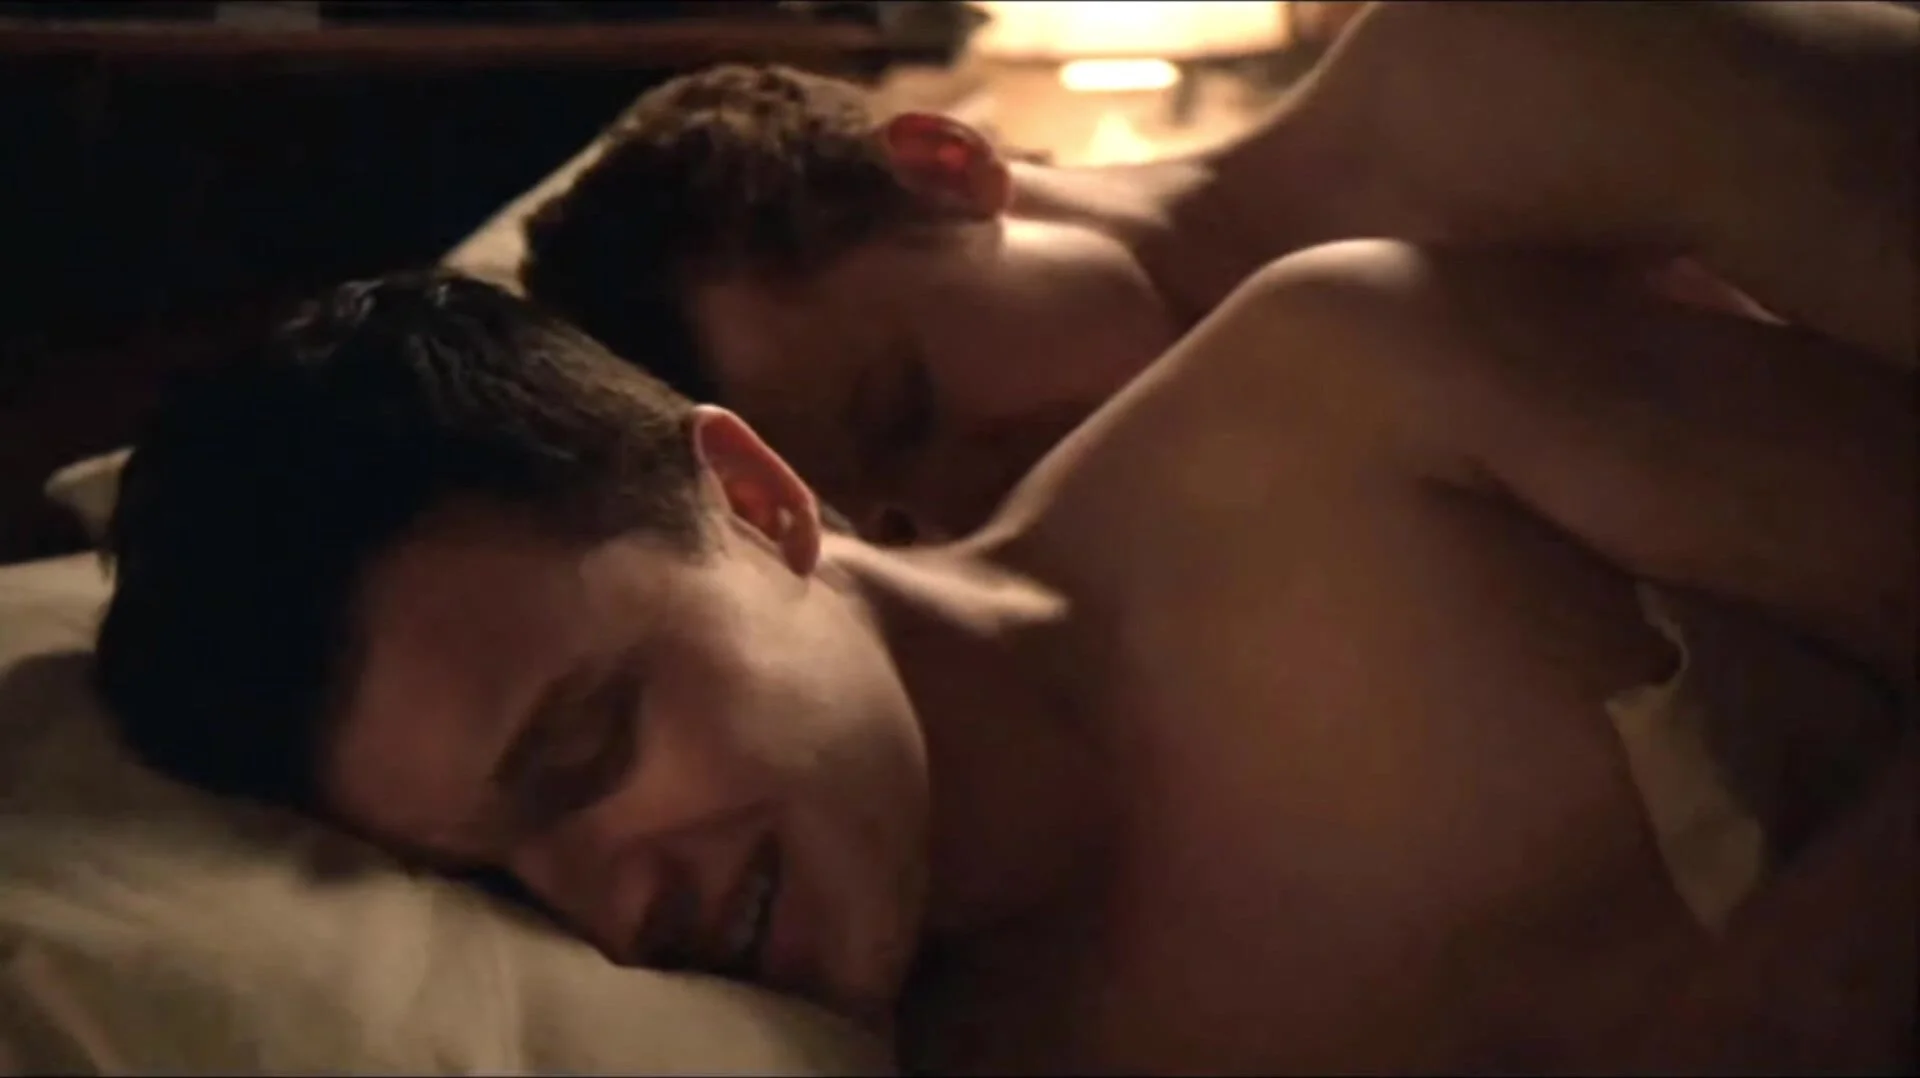 Gay sex tv scenes pic tumblr